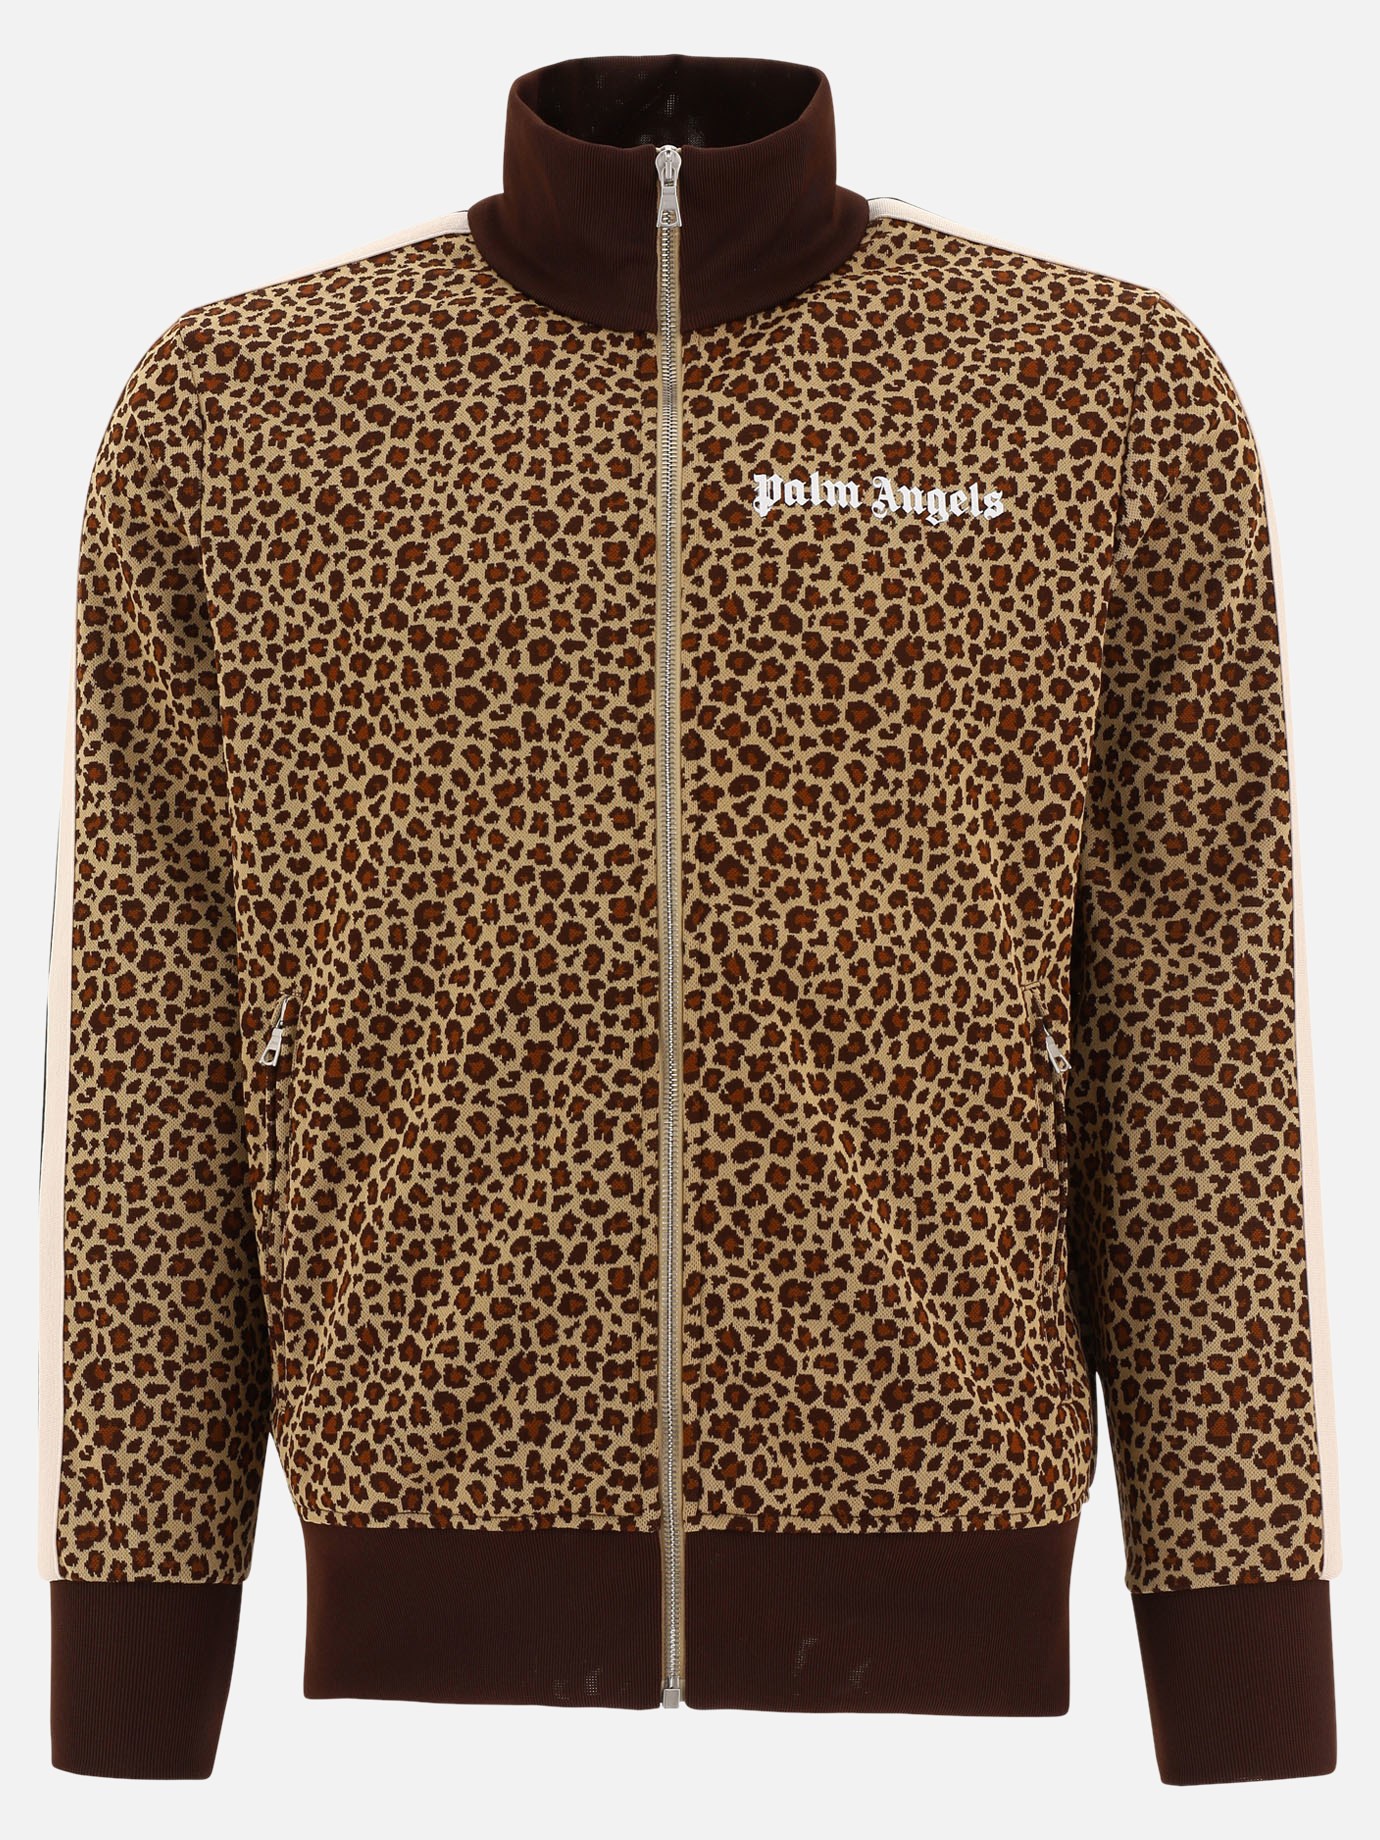  Leopard  sweatshirtby Palm Angels - 4